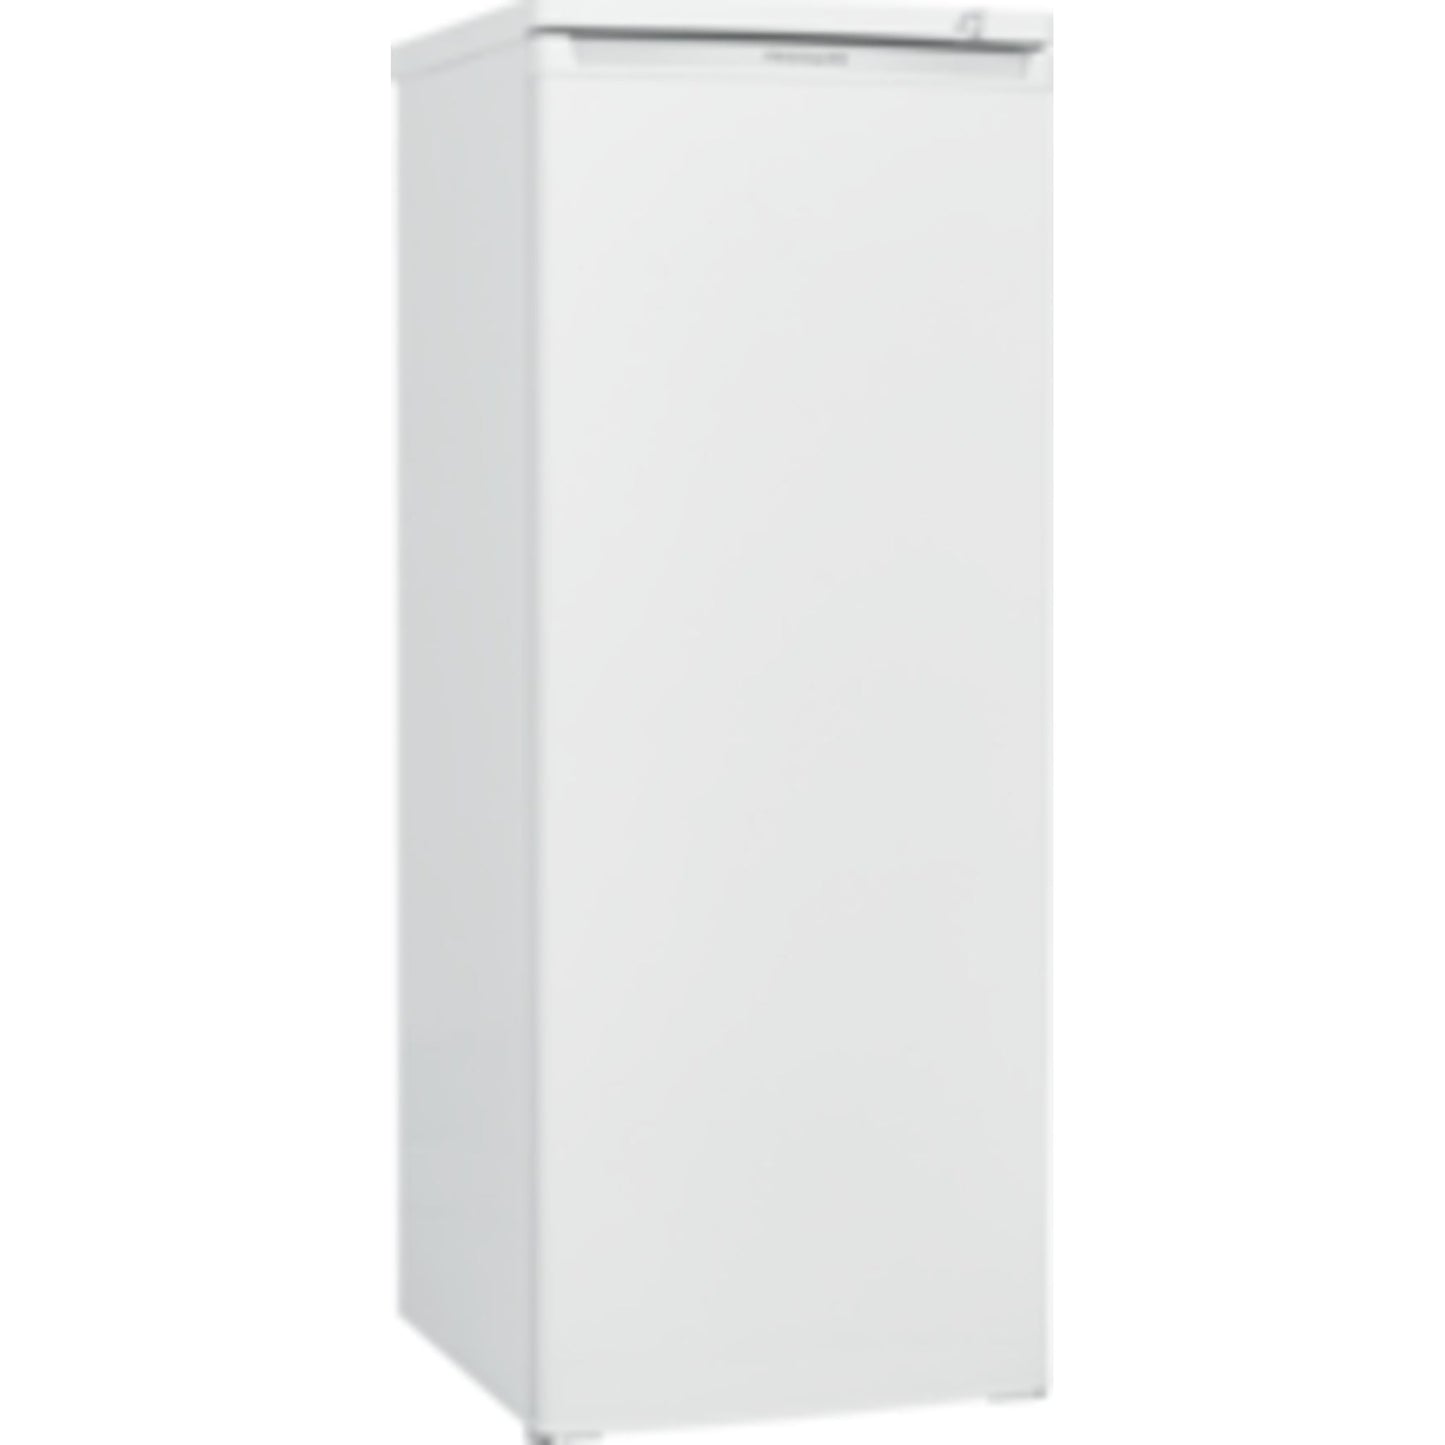 Frigidaire Upright Freezer (FFUM0623AW) - White